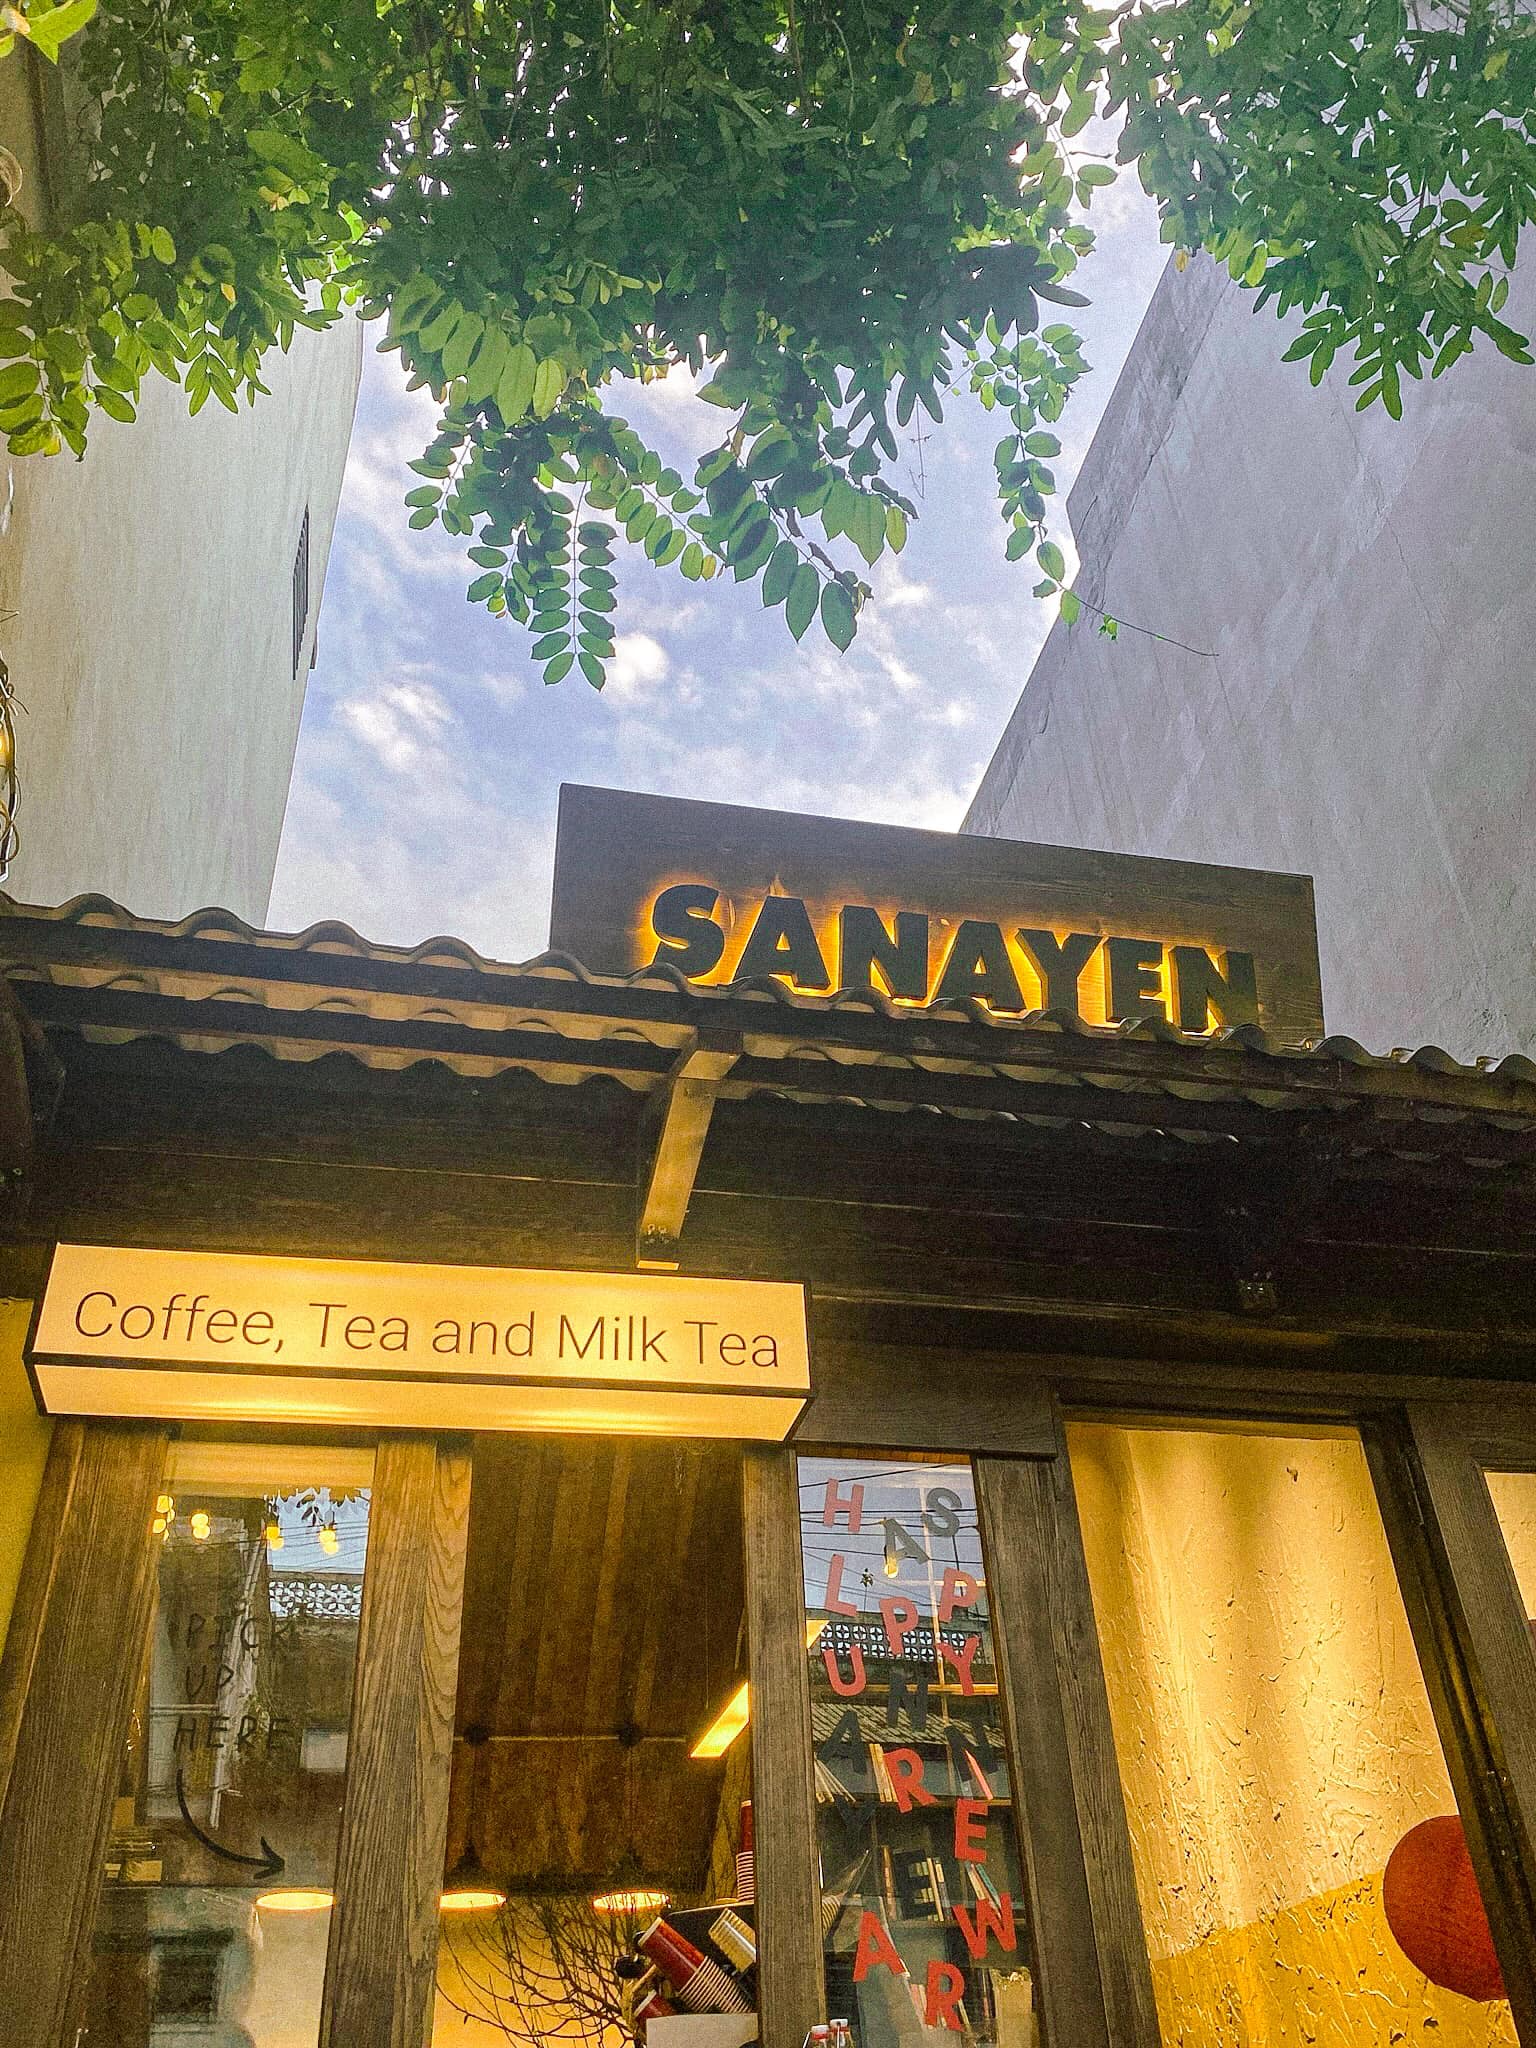 Sanayen Coffee & Tea nằm ngay góc phố sầm uất.